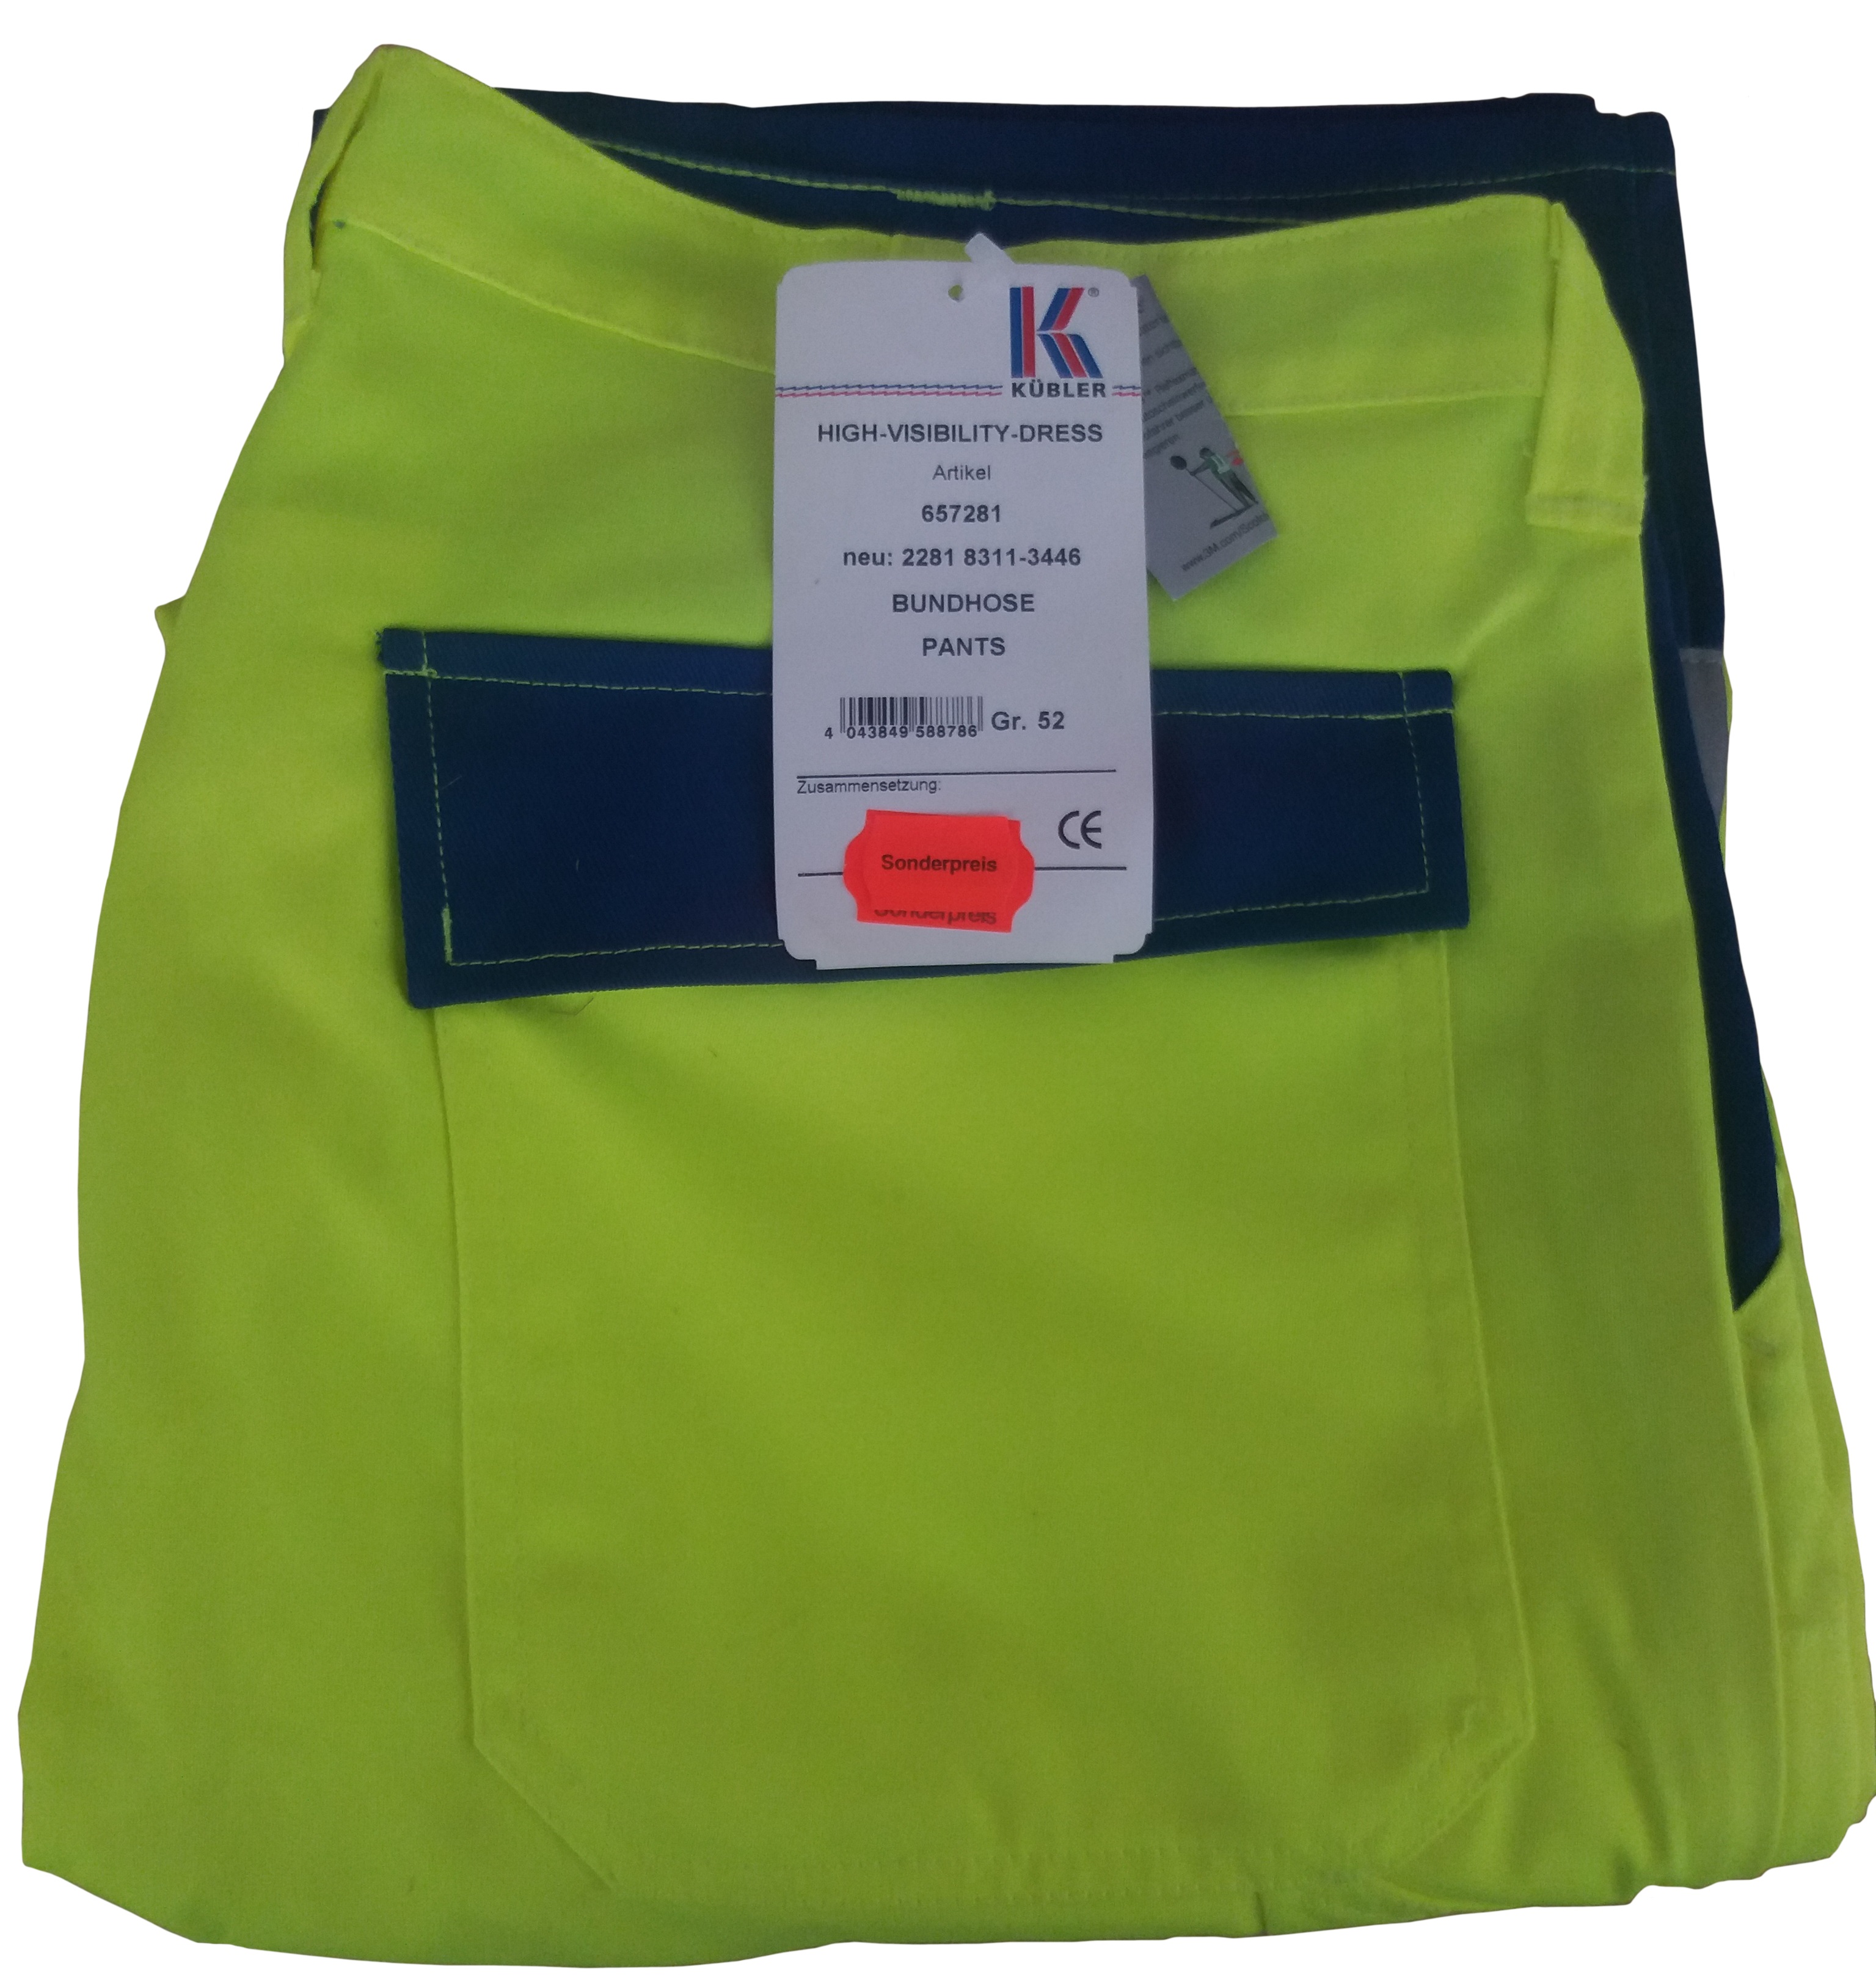 KÜBLER Warnschutzhose Warnschutzkleidung Warnkleidung High Visibility Kleidung warngelb kornblau